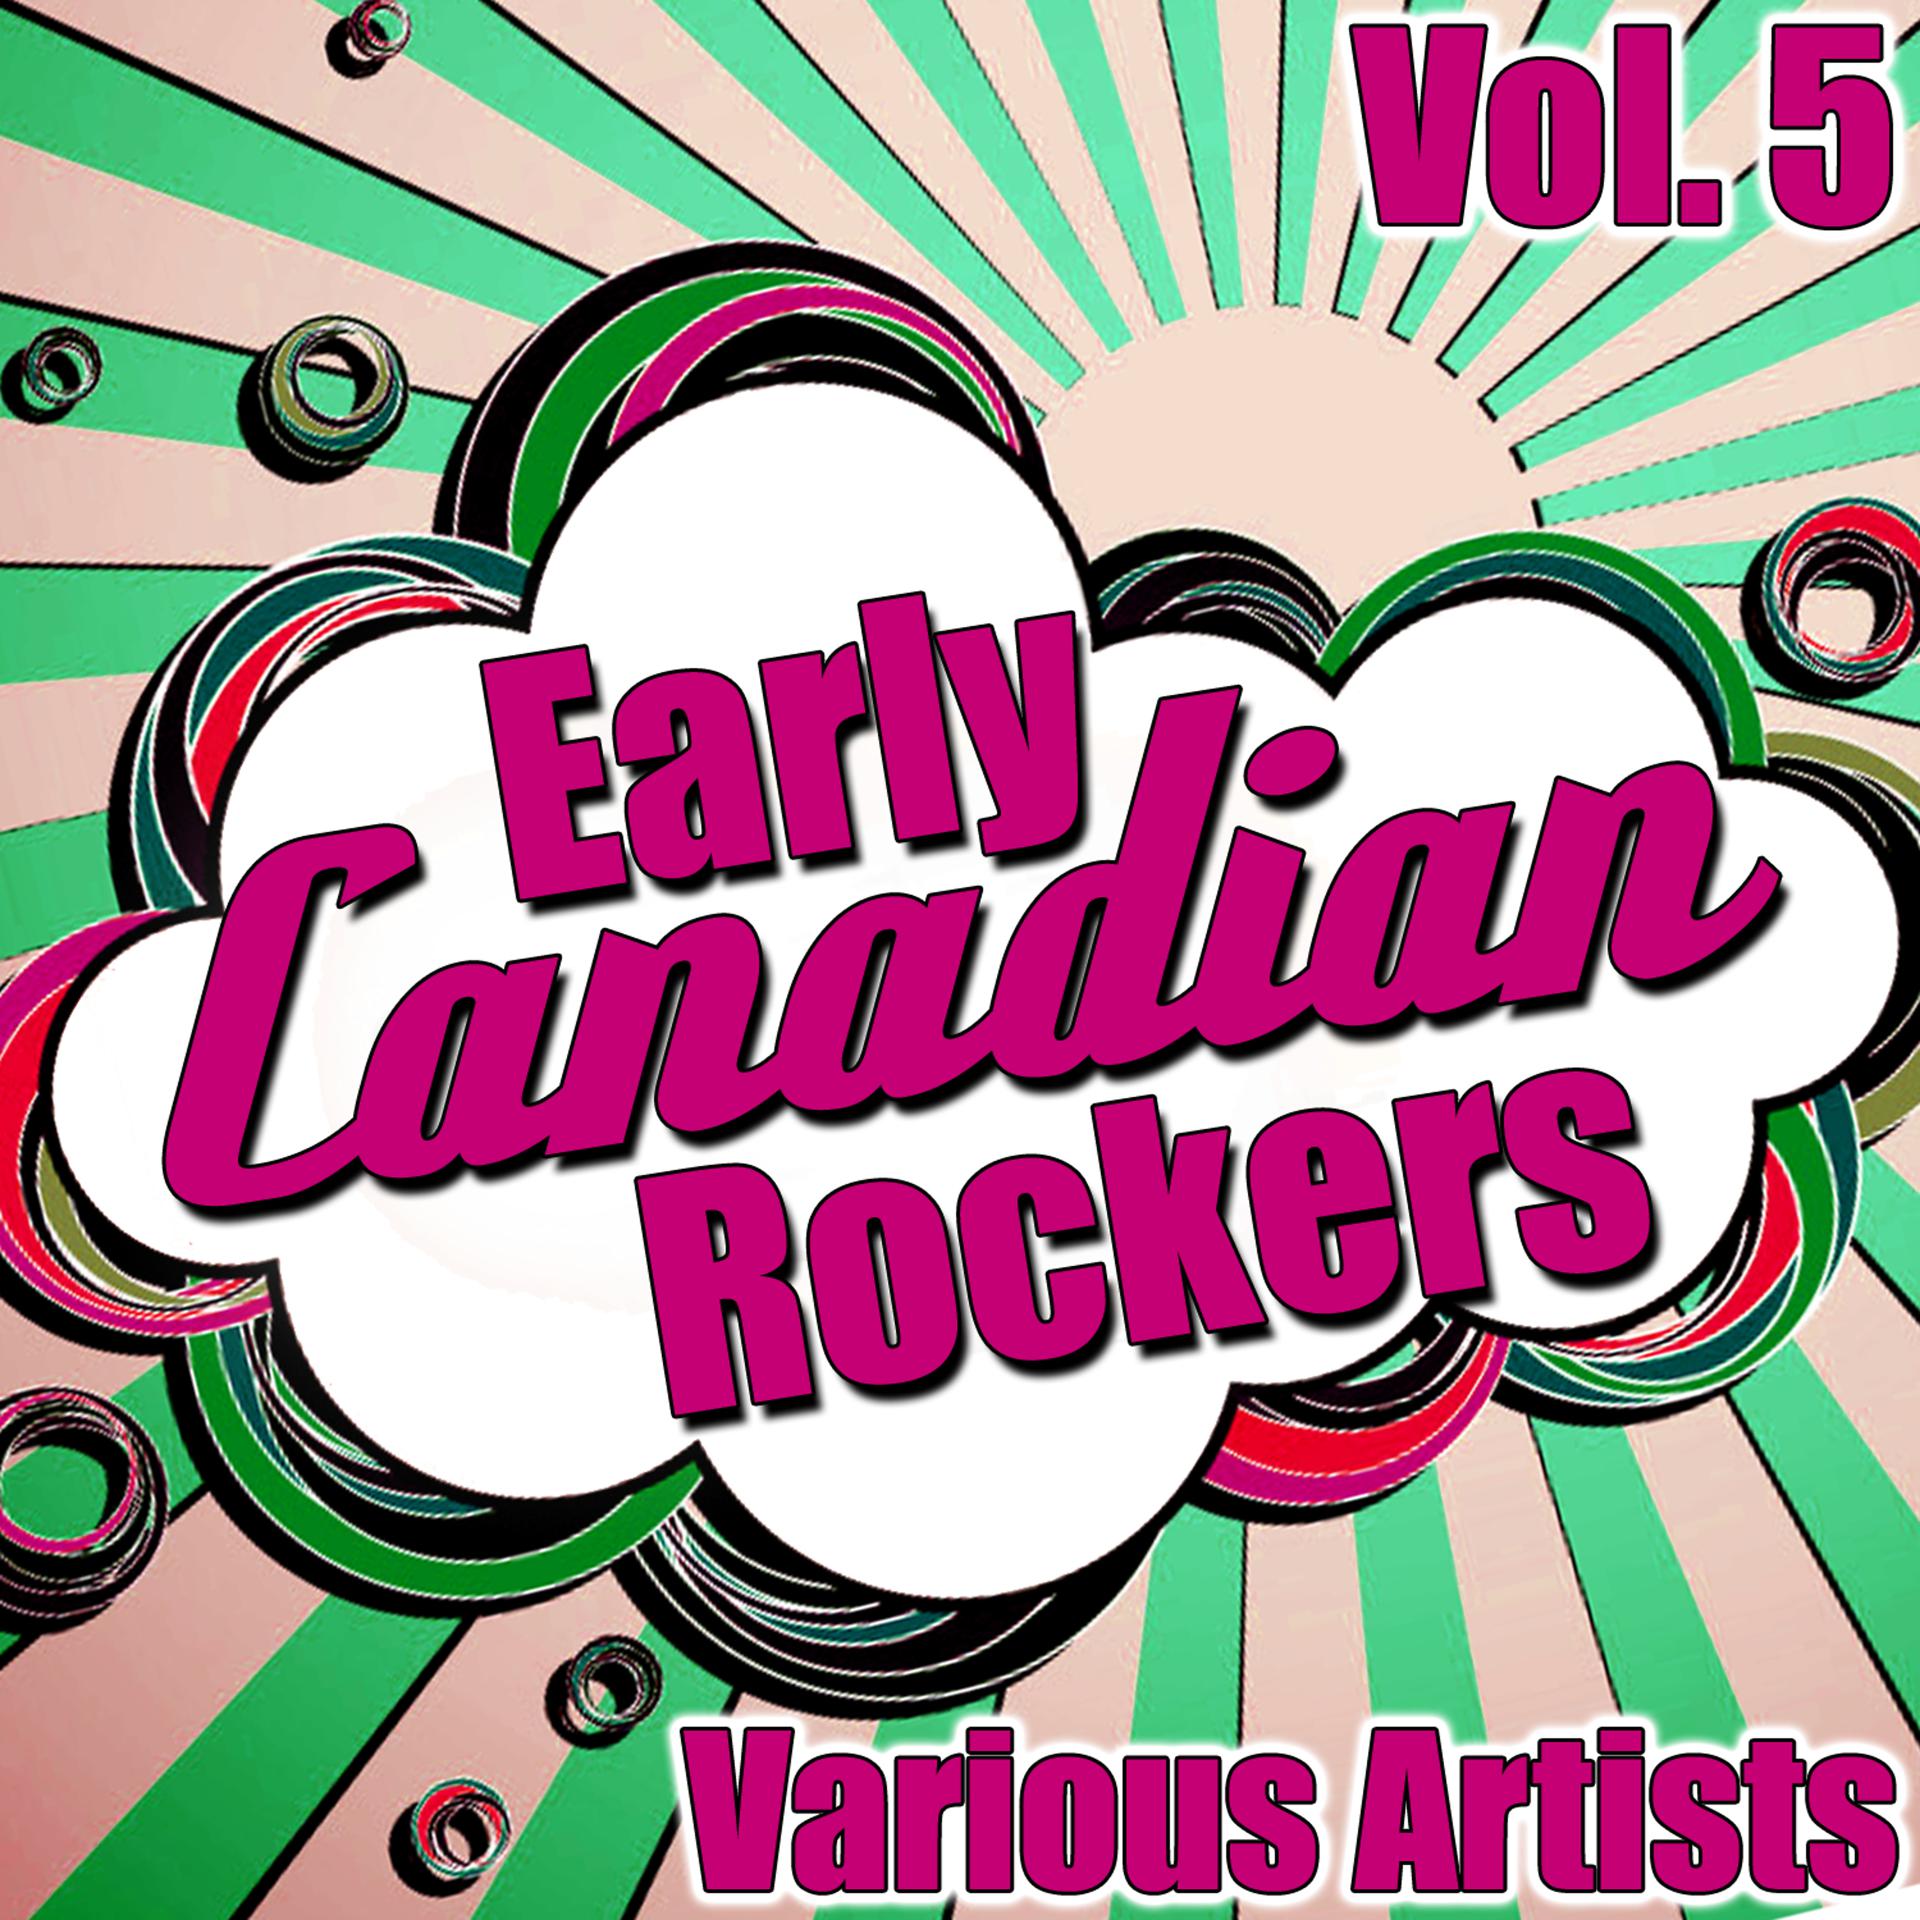 Постер альбома Early Canadian Rockers Vol. 5